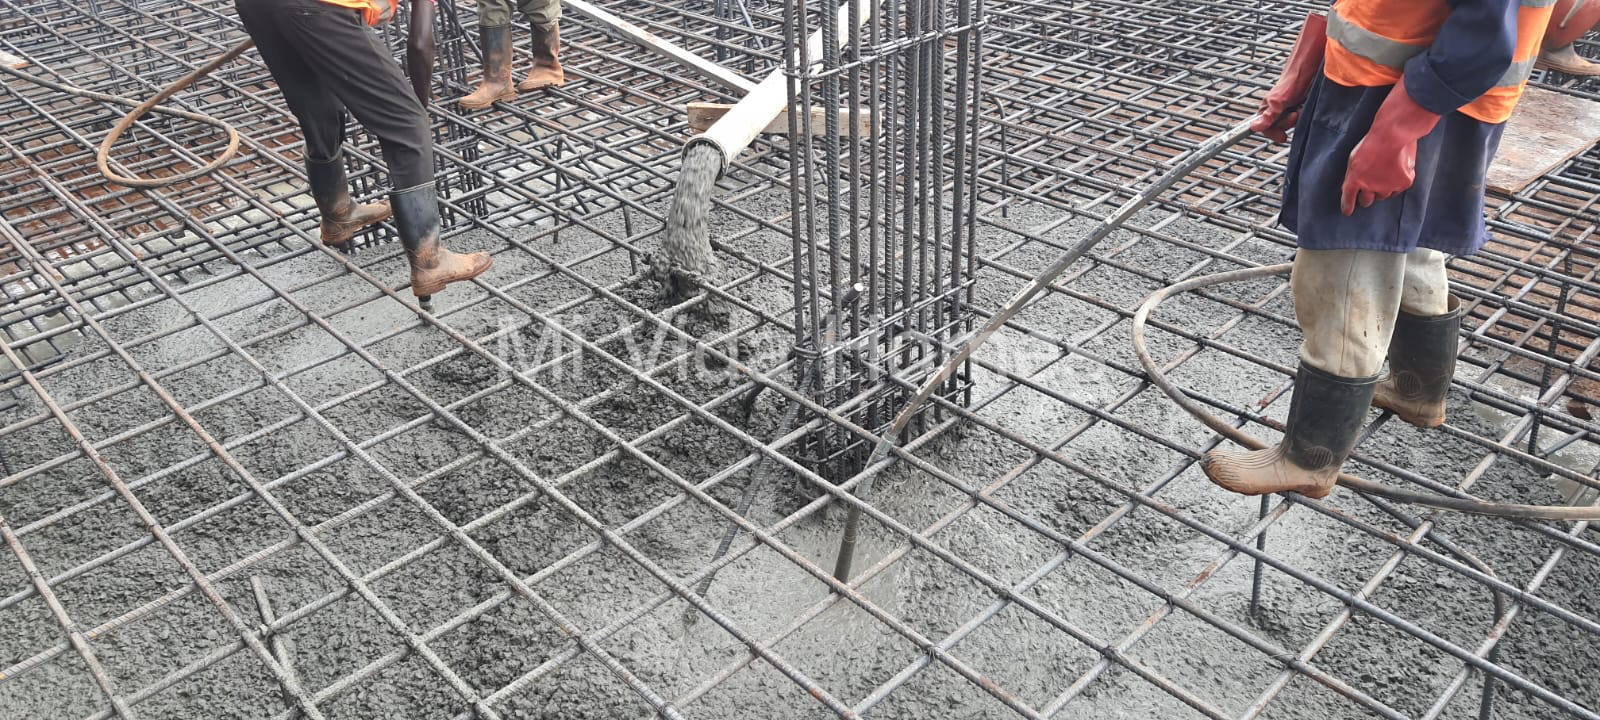 KEZA Riruta is Now Under Construction